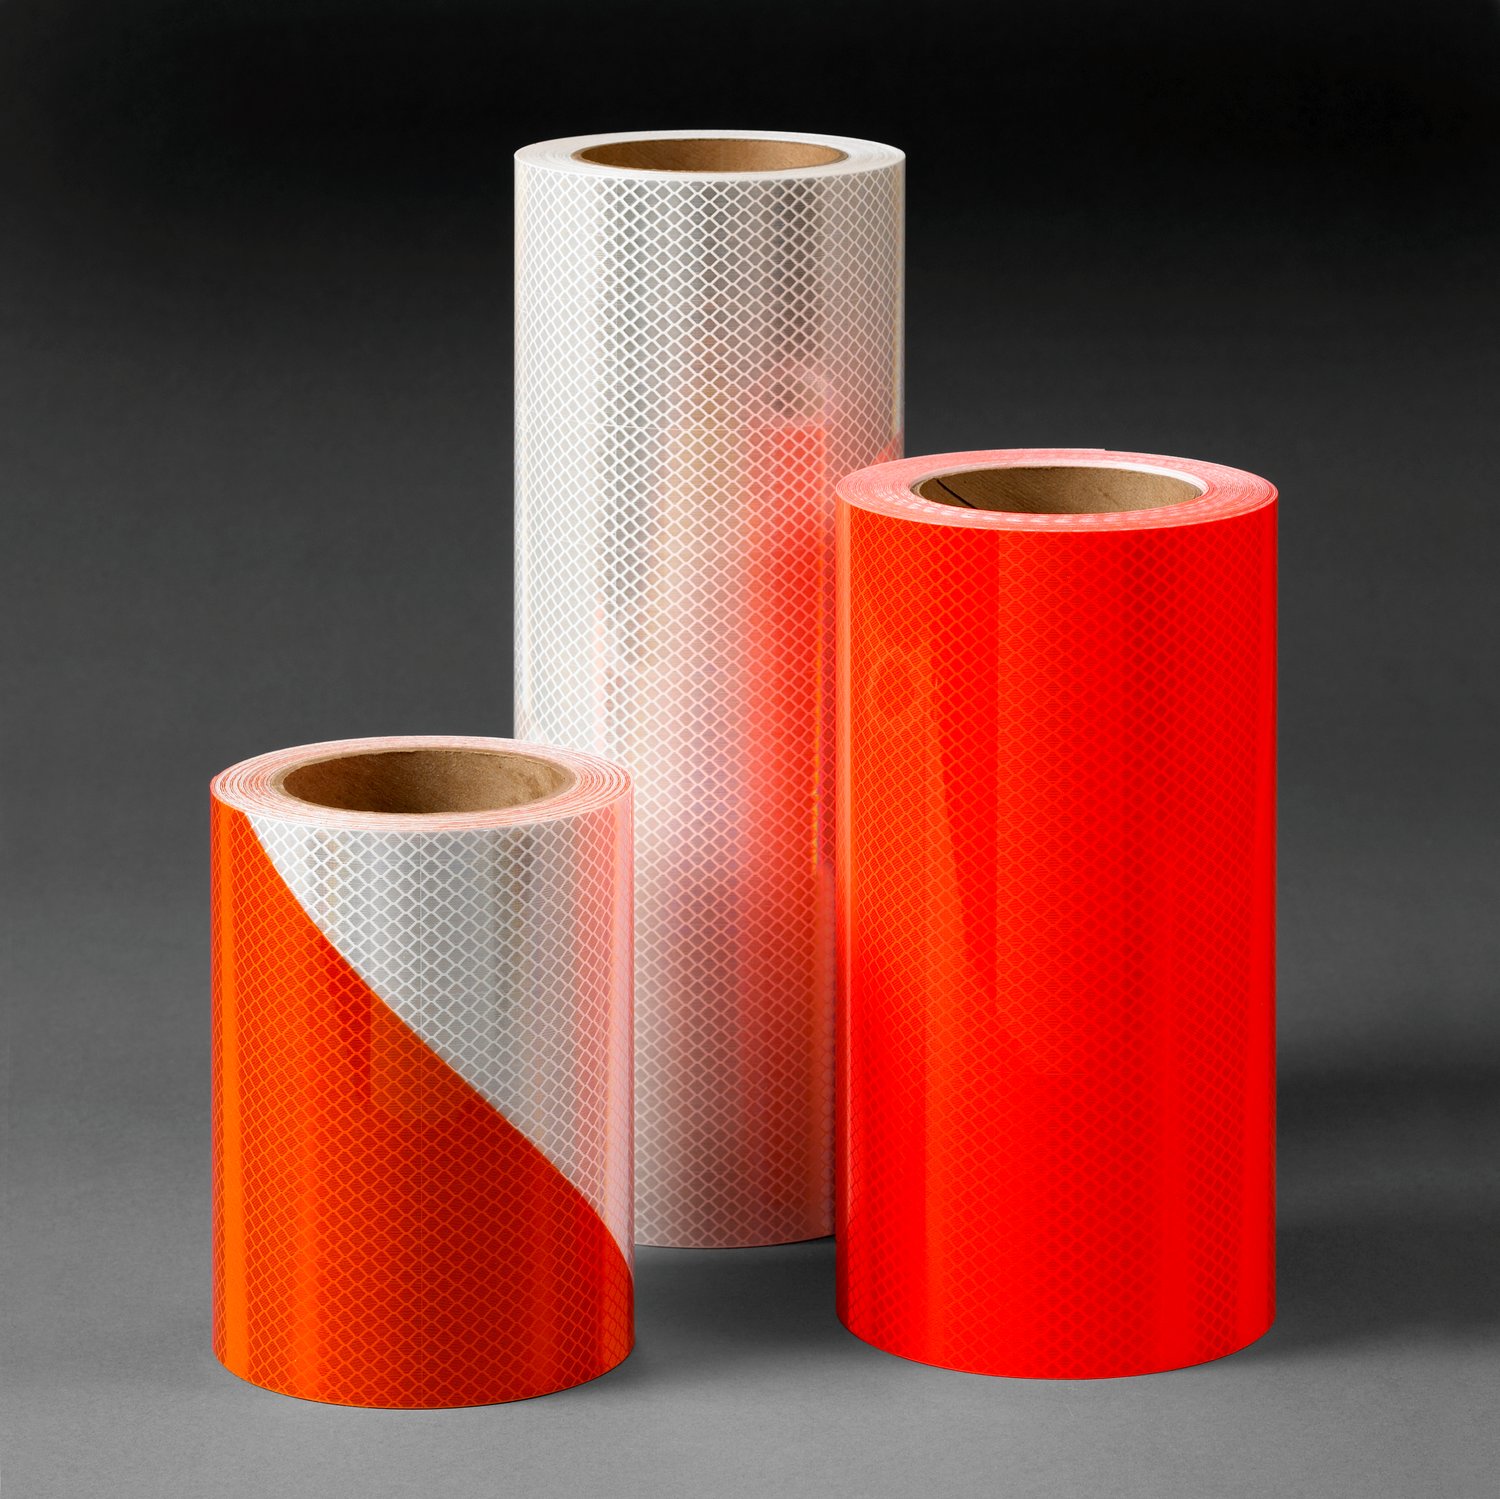 7010390577 - 3M Diamond Grade DG³ Pre-Striped Barricade Sheeting Series 444R
Orange/White, 4 in right, 7.75 in x 100 yd